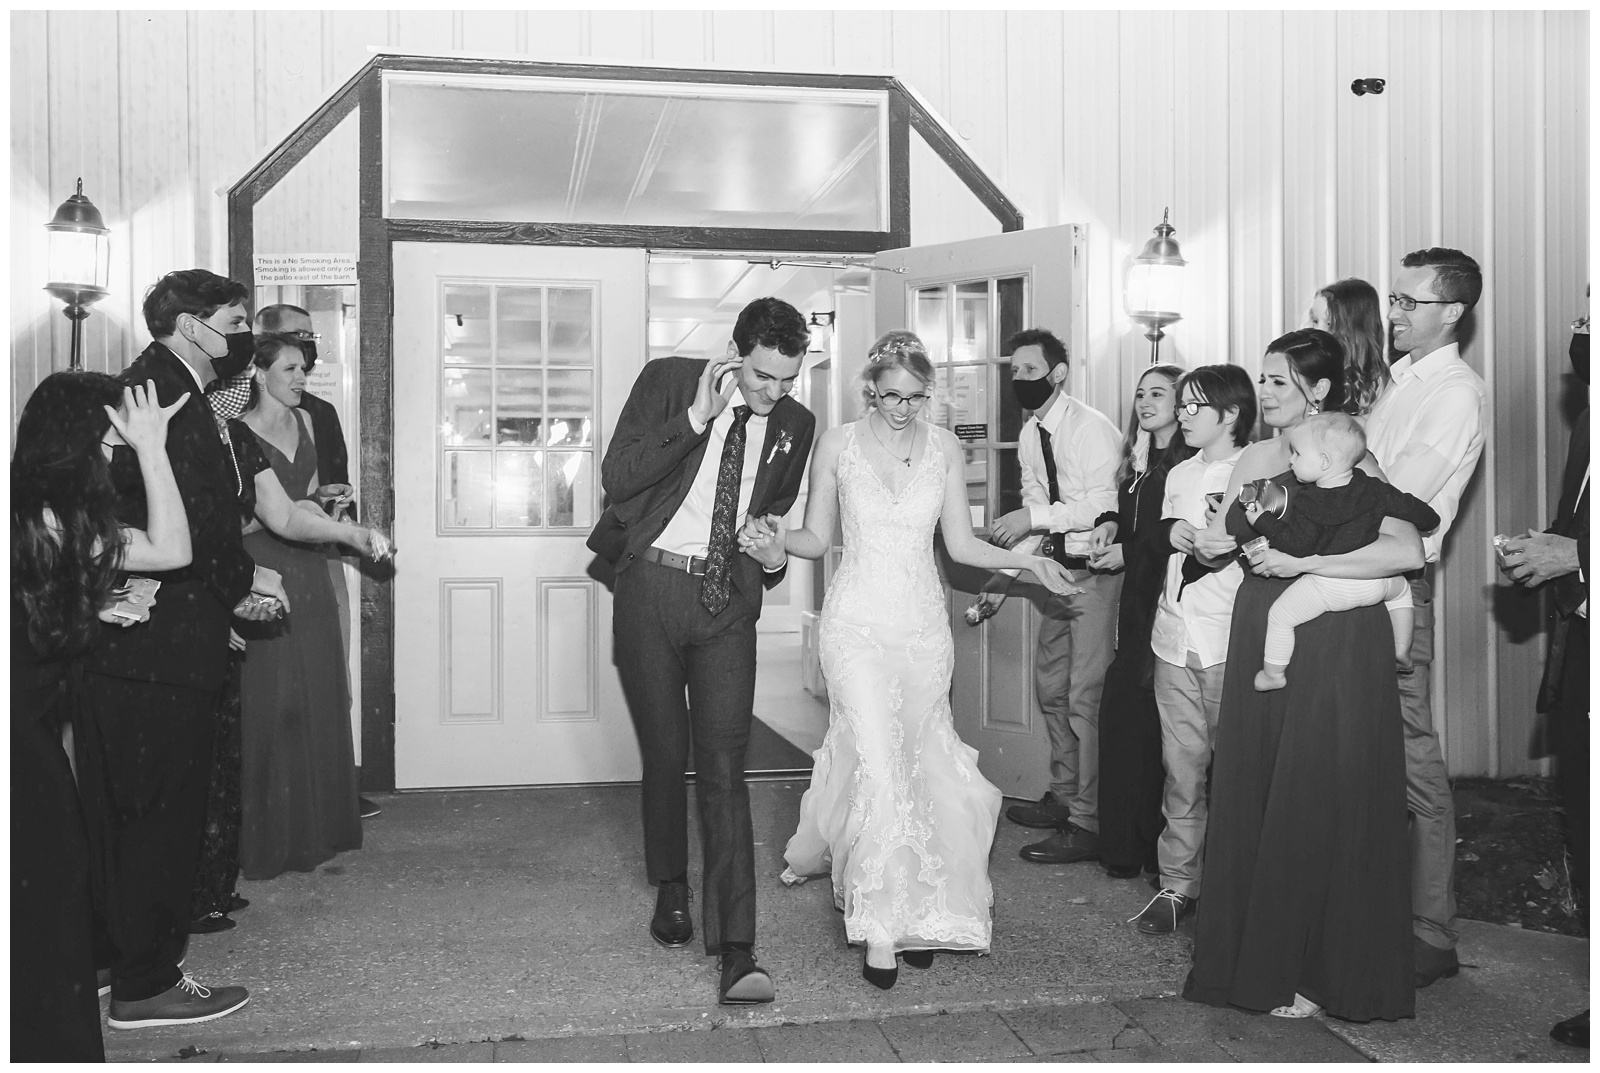 Wedding photography at Victorian Veranda Country Inn in Lawrence, Kansas, by Kansas City wedding photographers Wisdom-Watson Weddings.